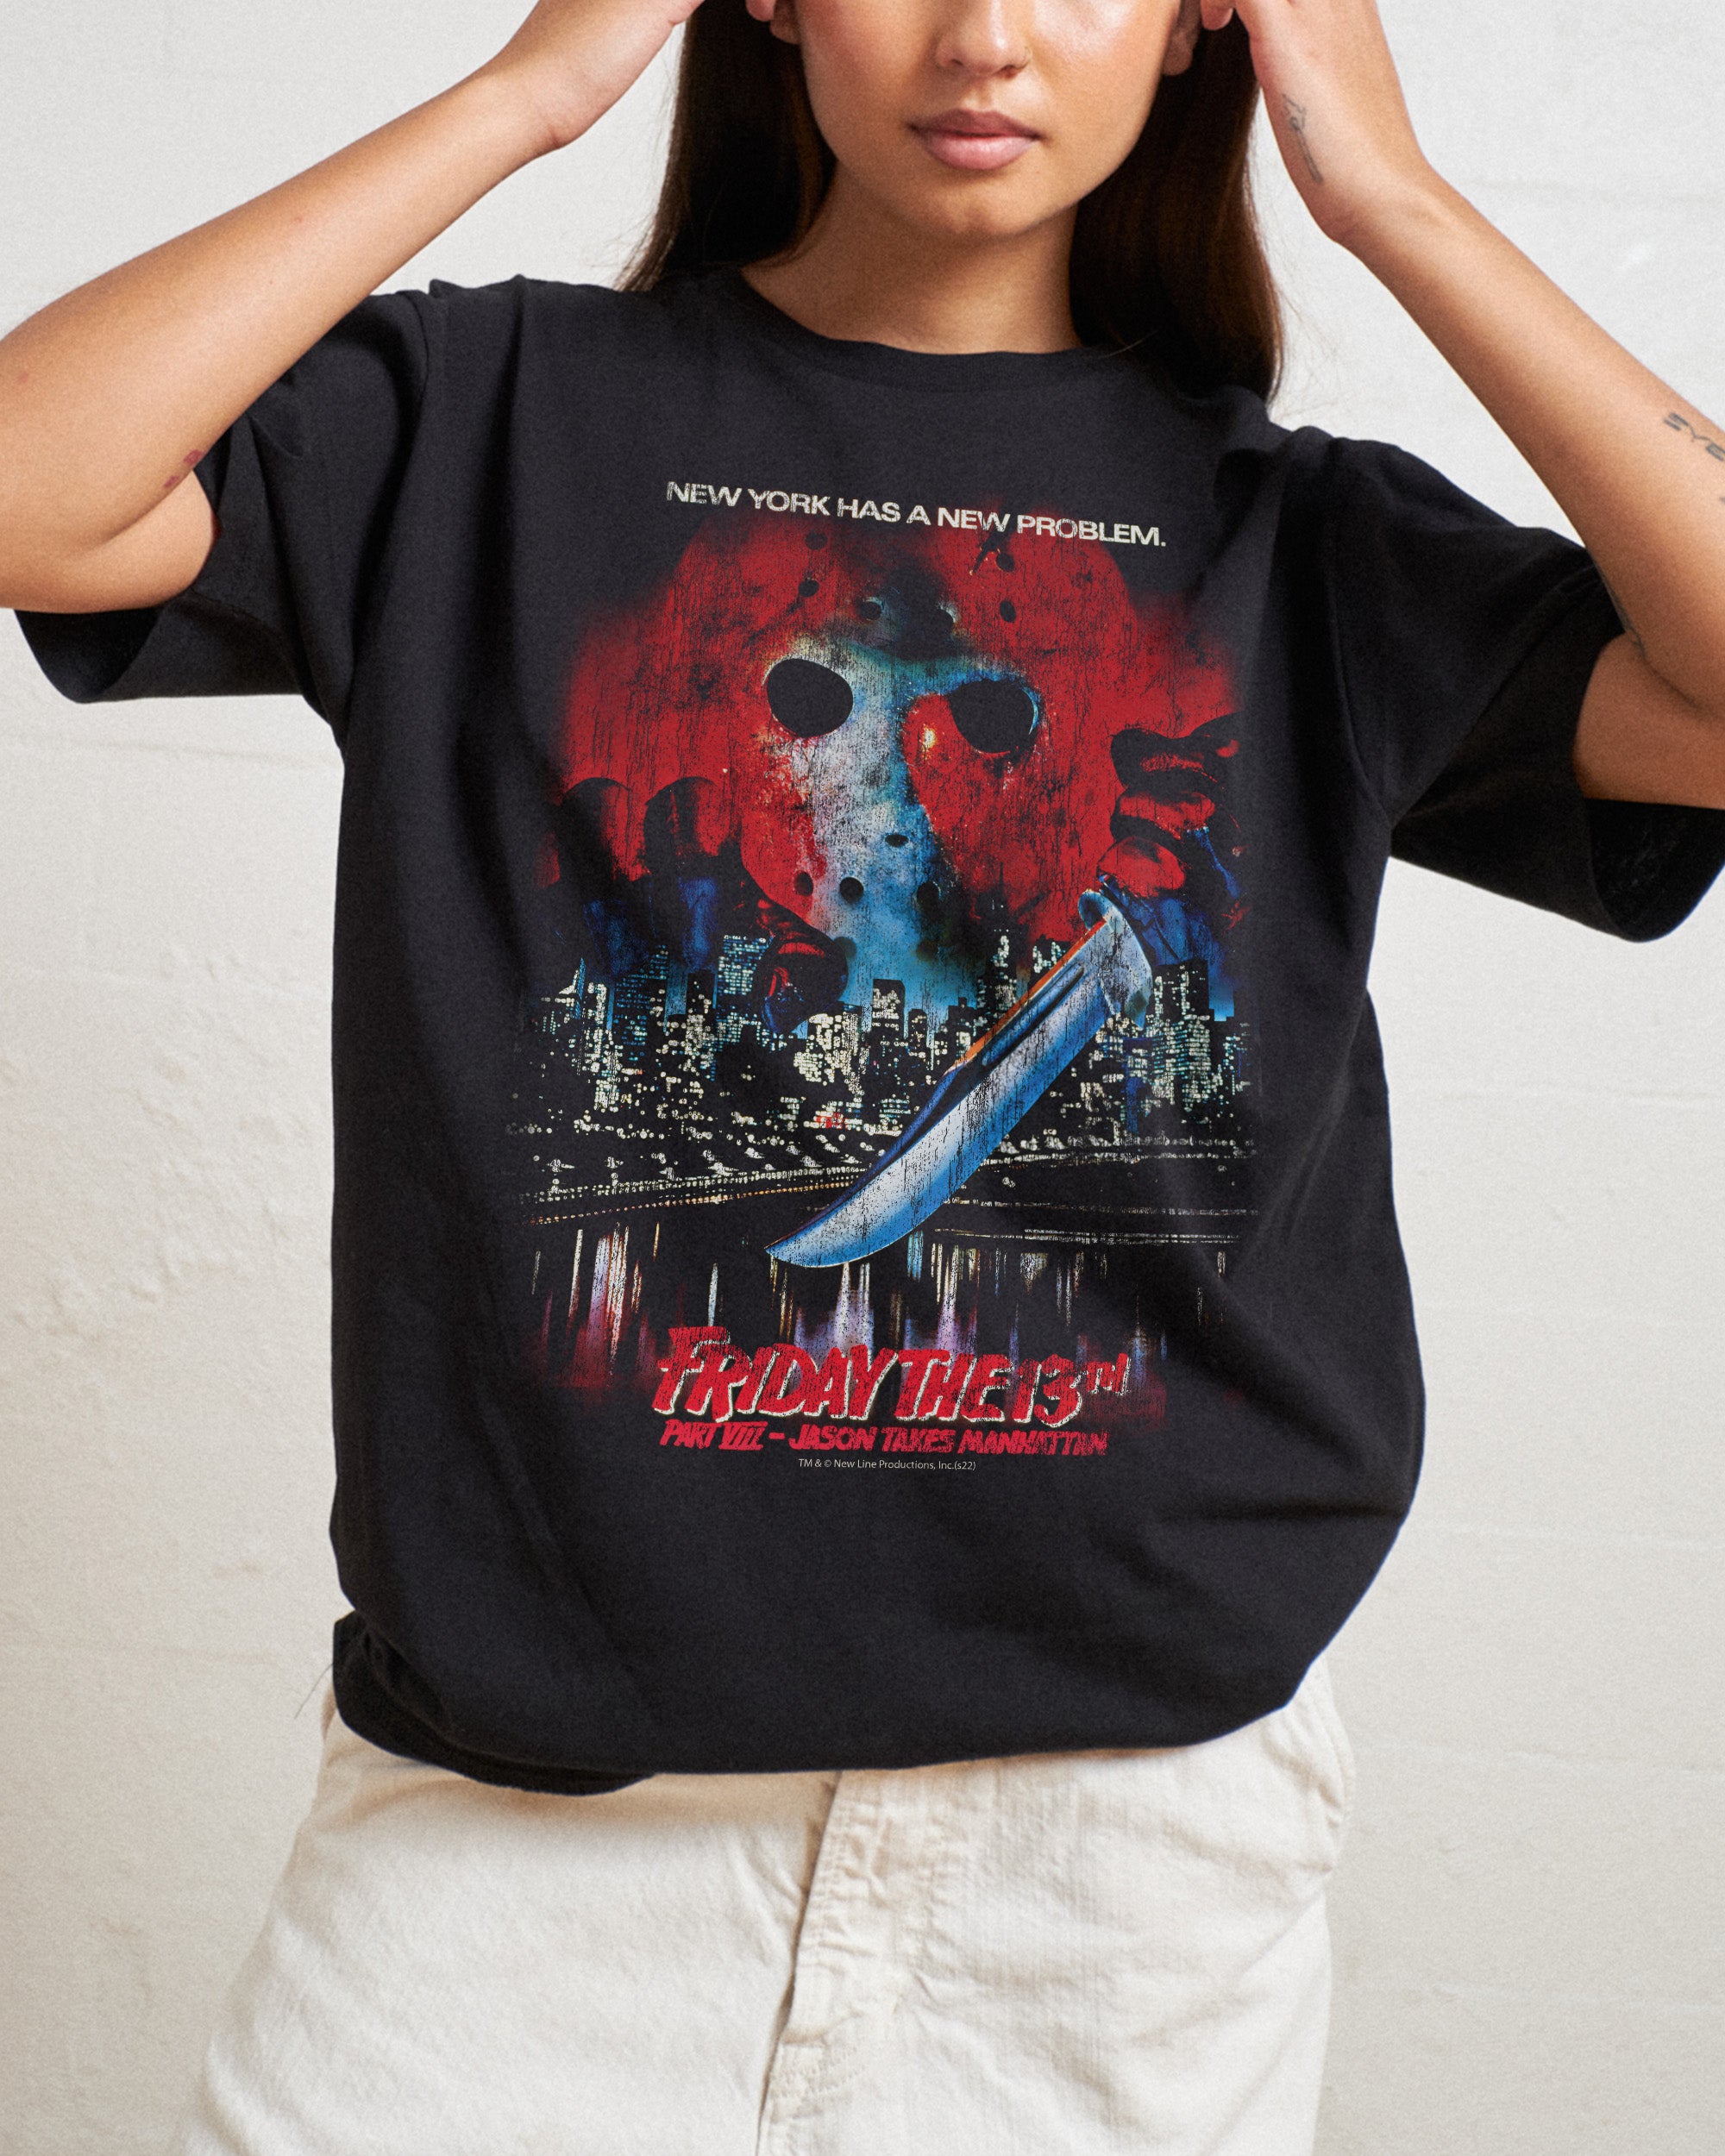 Friday the 13th - Jason Takes Manhattan T-Shirt